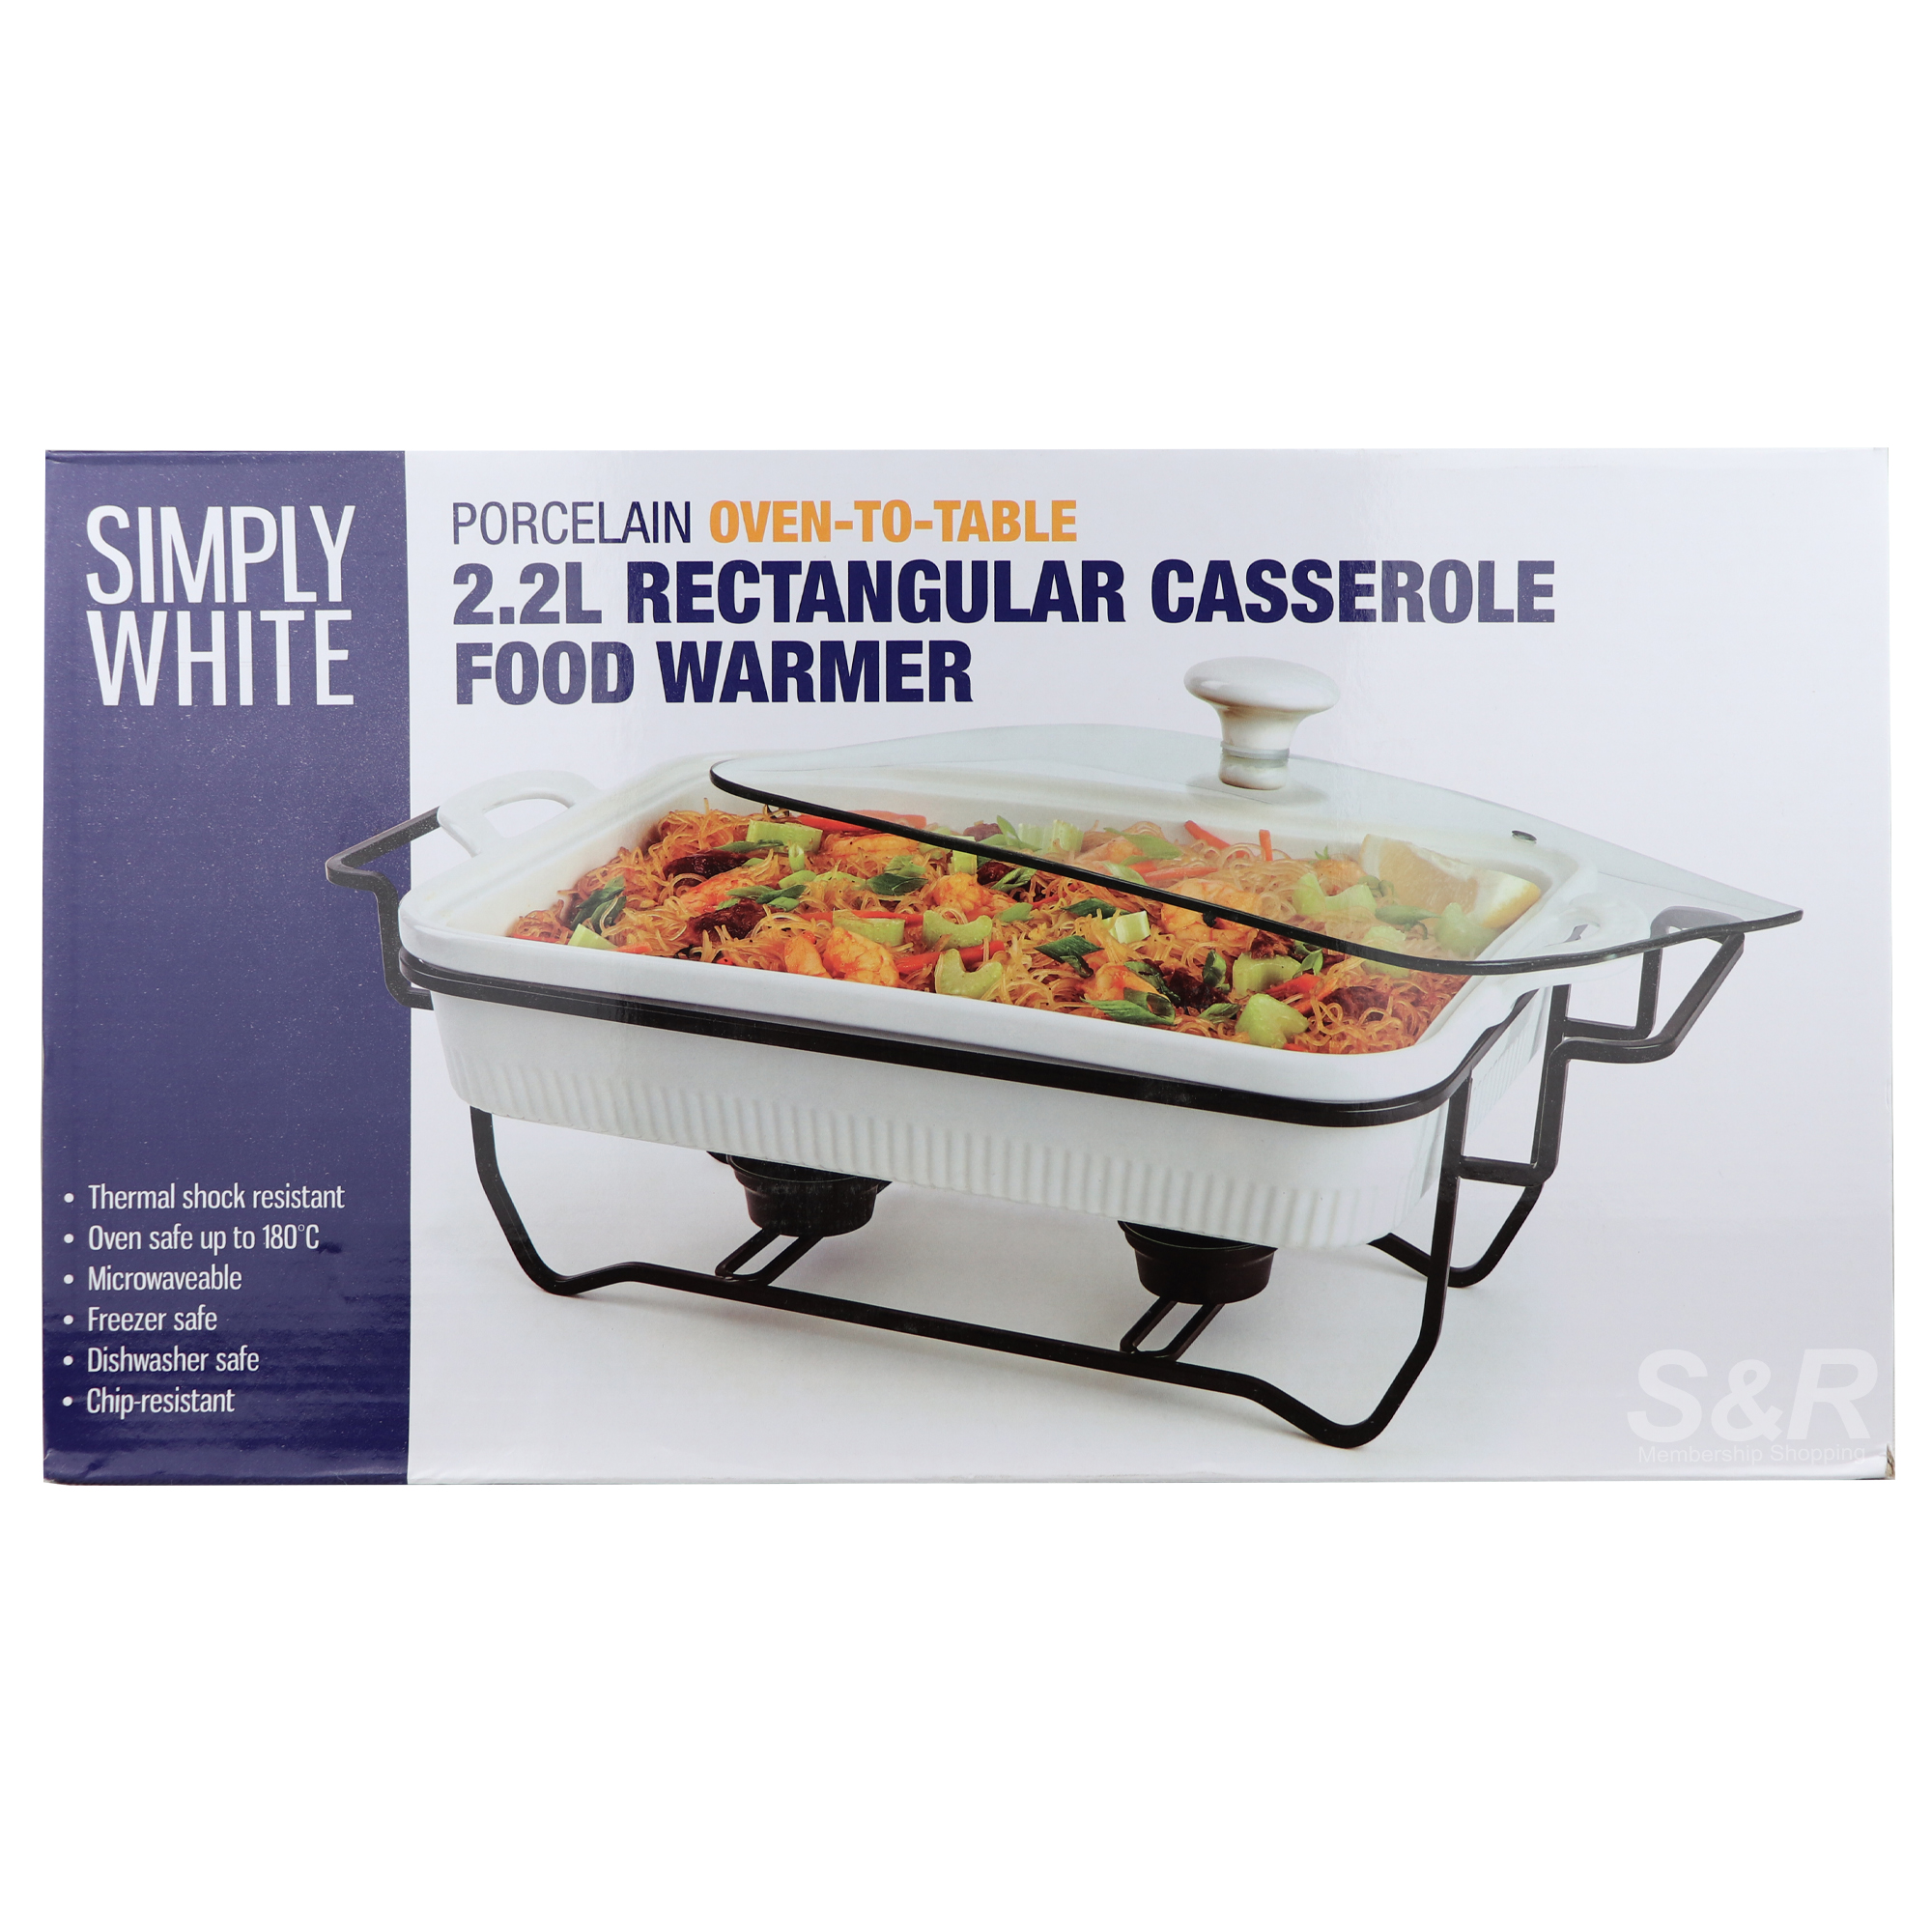 Simply White 2.2L Rectangular Casserole Food Warmer